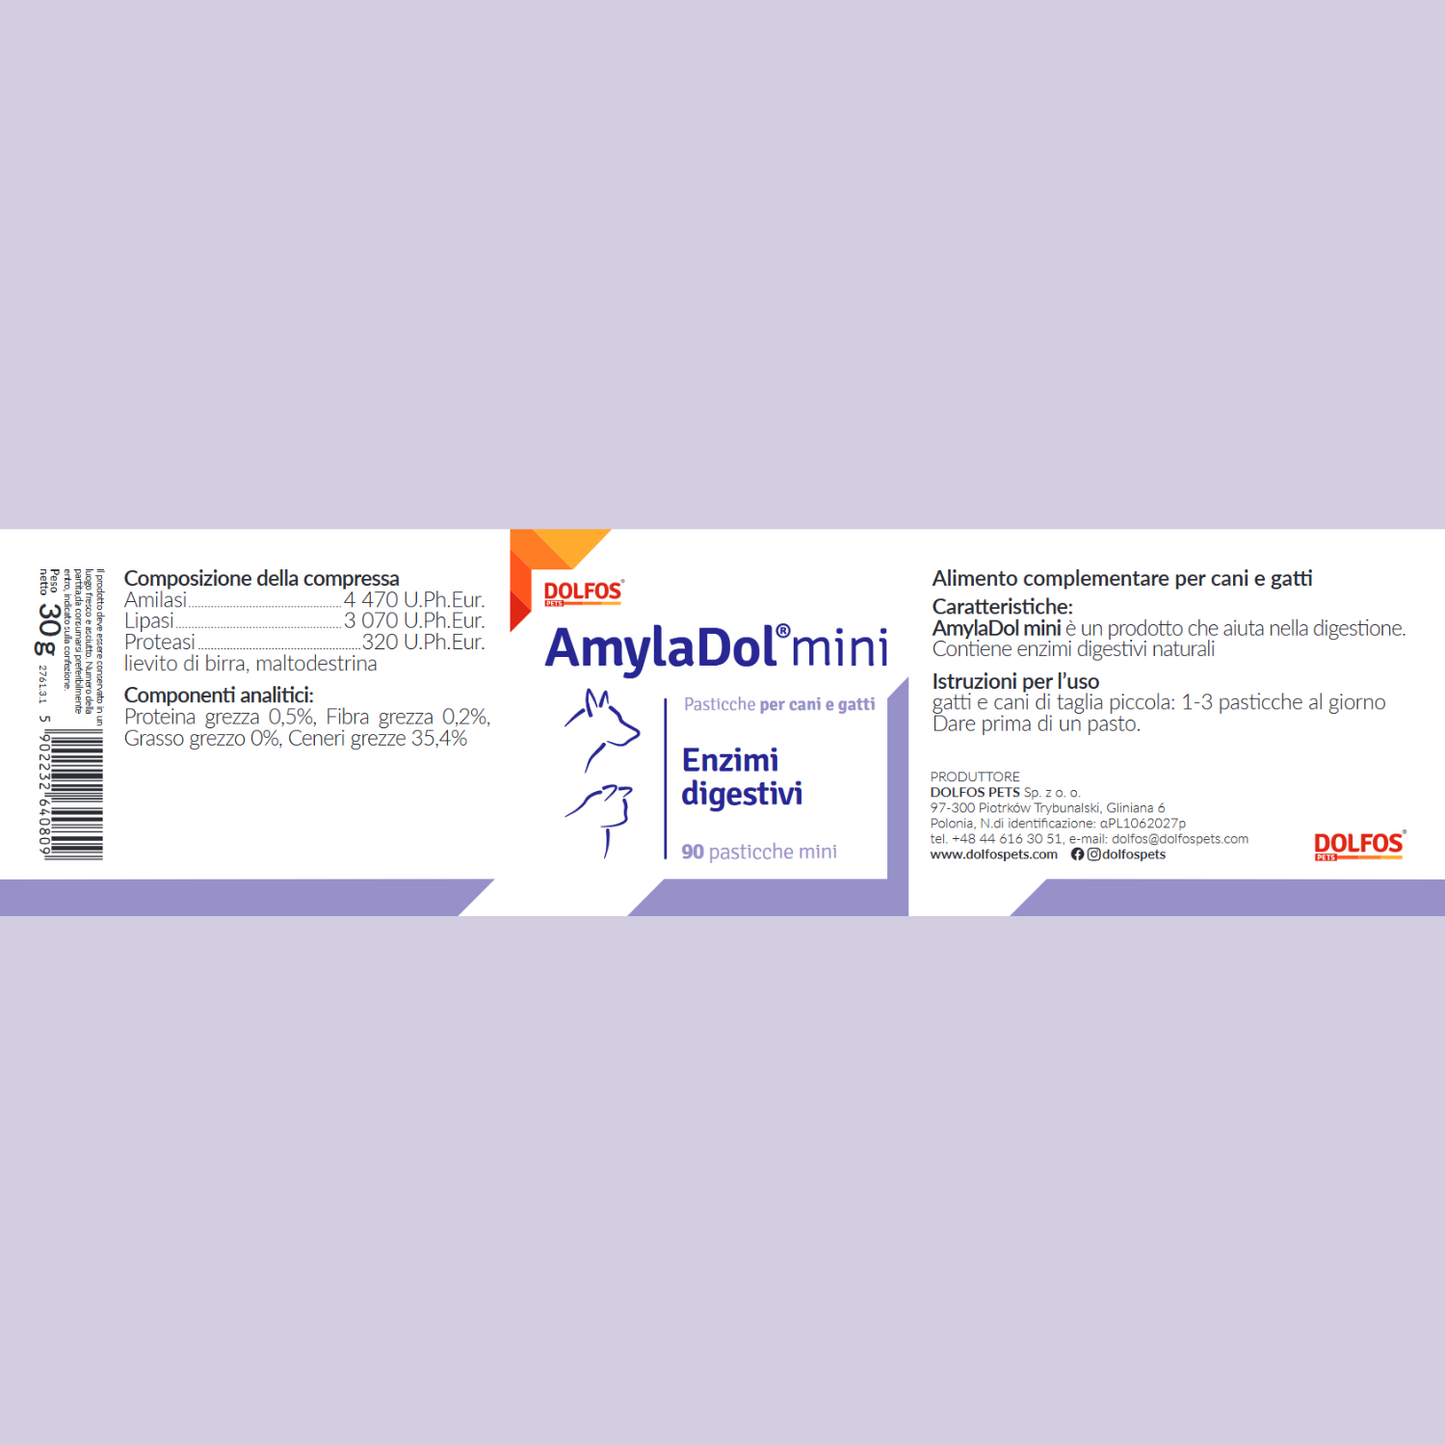 AmylaDol mini 90 "Enzimi digestivi: Amilasi, Lipasi e Proteasi"